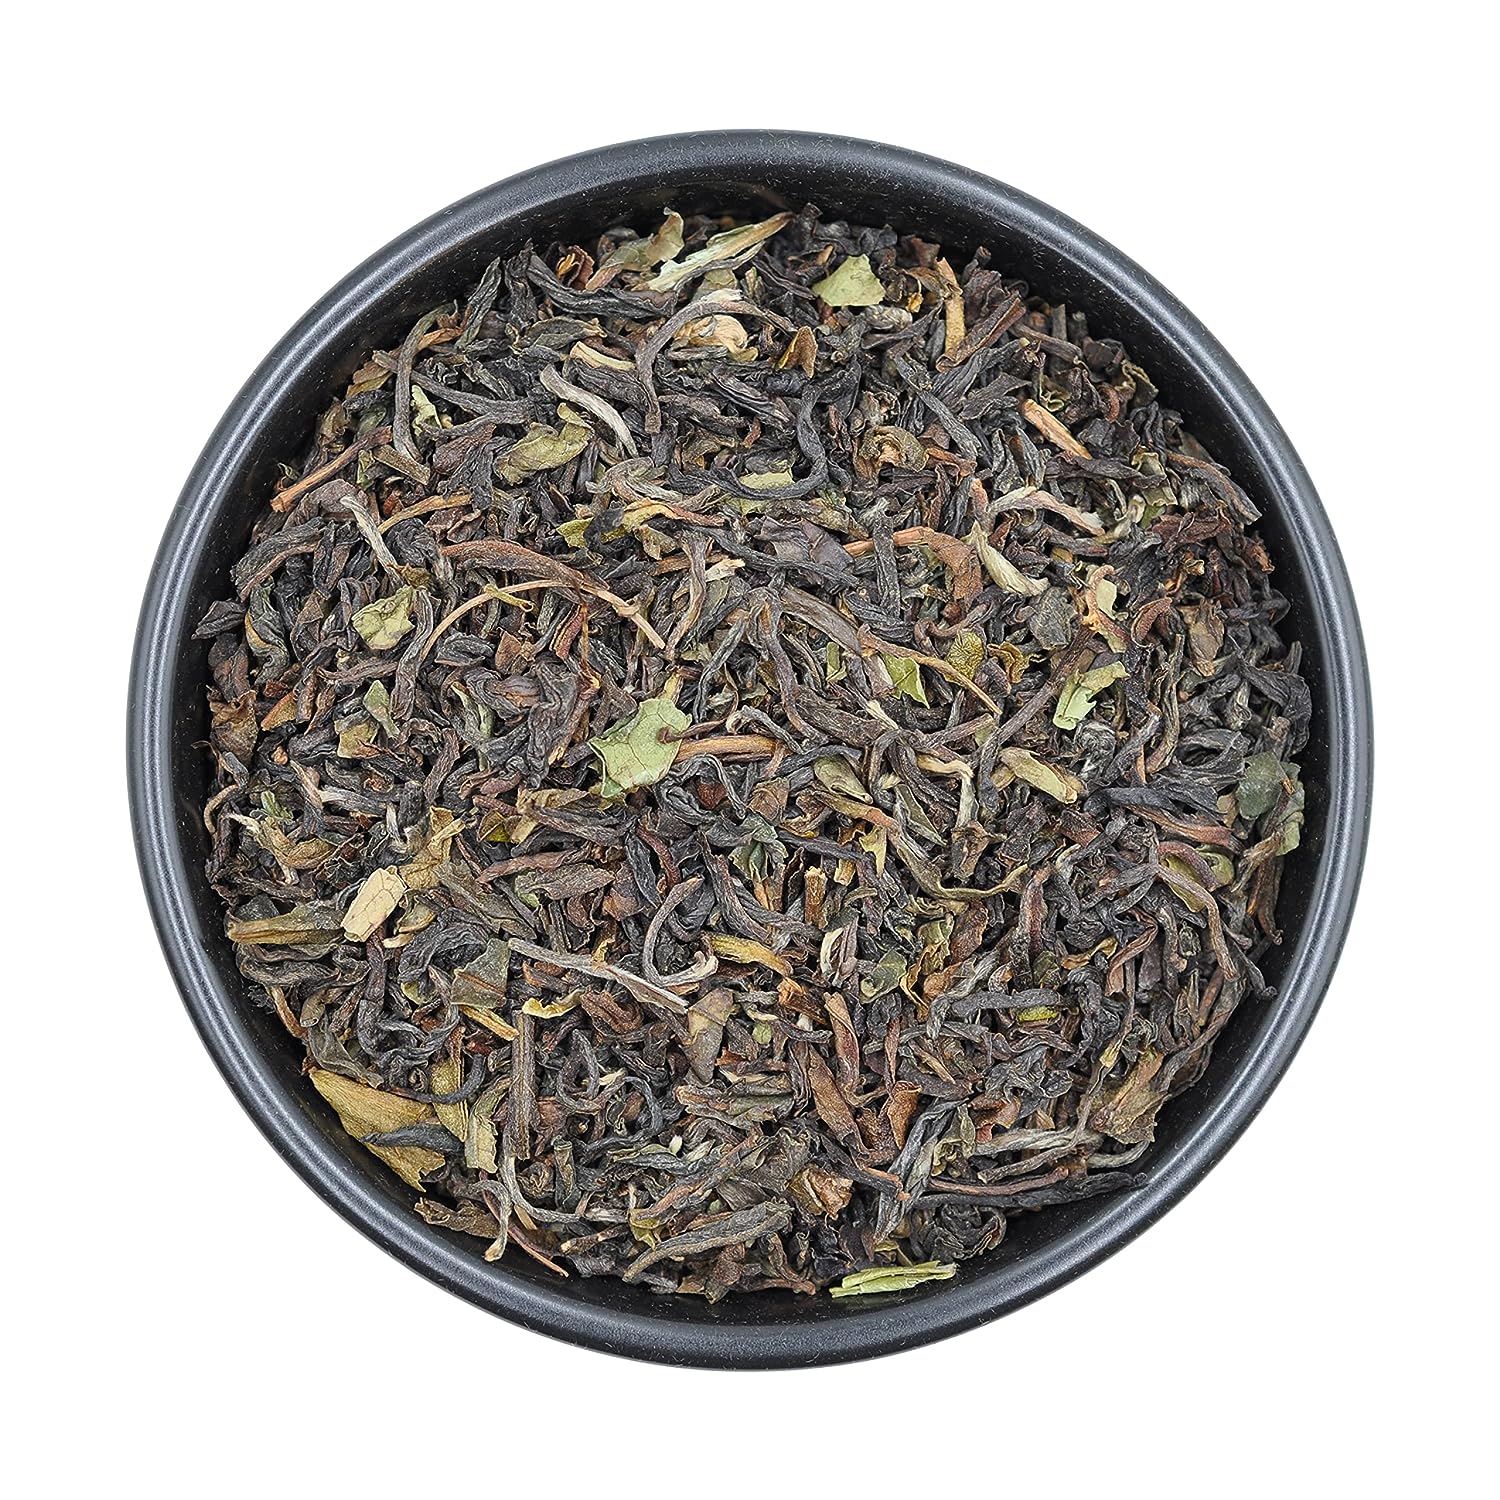 Darjeeling Loose Leaf Tea FTGFOP1 -  Finest Grade 2nd Flush, Carefully Hand Picked, 100% Pure Unblended Tippy Golden Flowery Orange Pekoe. Delicious Highgrown from Famous Gardens (Darjeeling FTGFOP1)